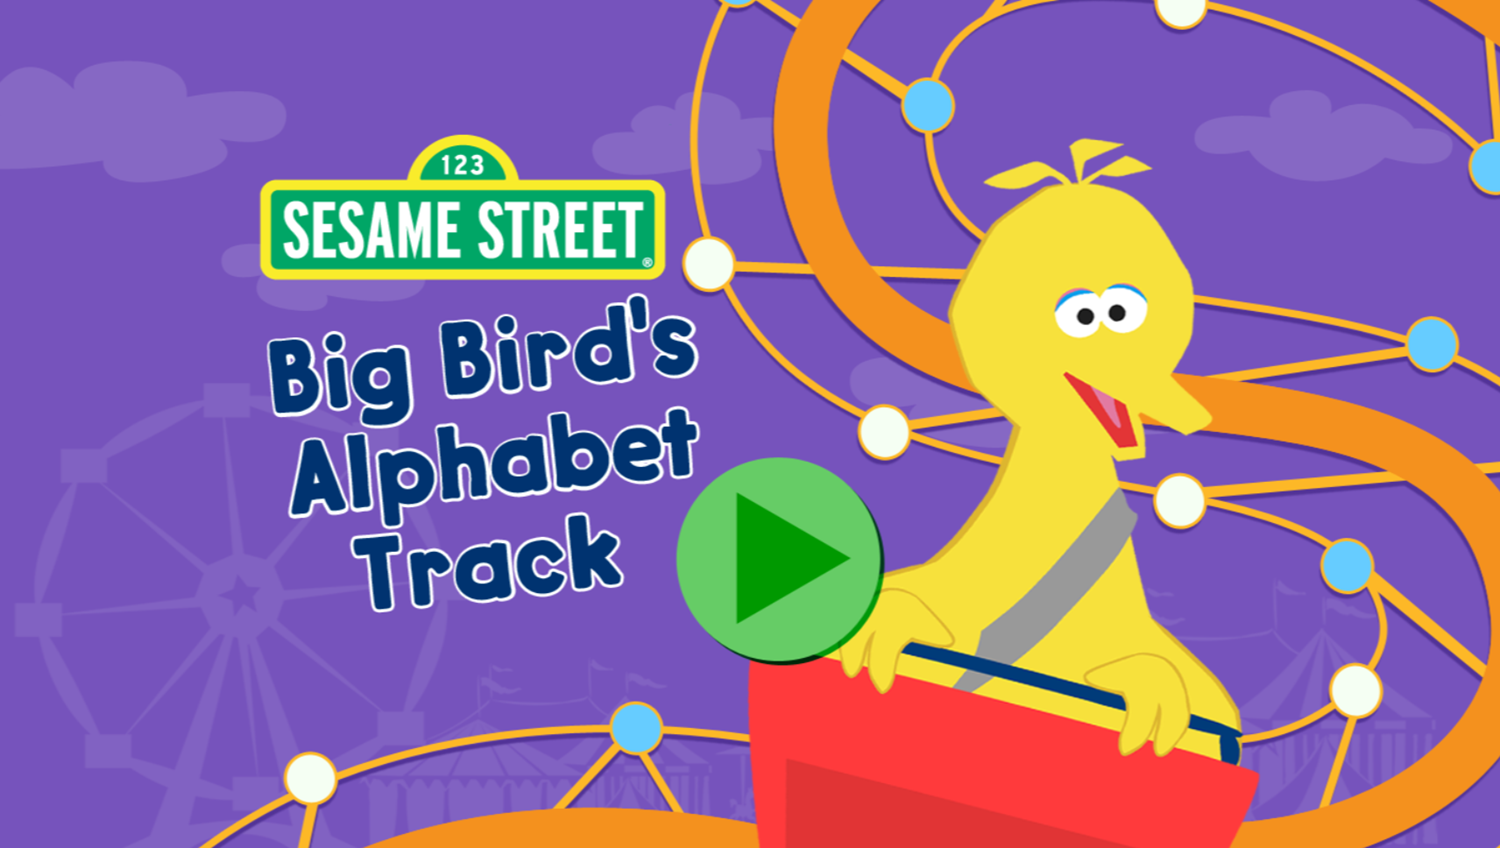 Sesame Street Big Bird's Alphabet Track Game Welcome Screen Screenshot.